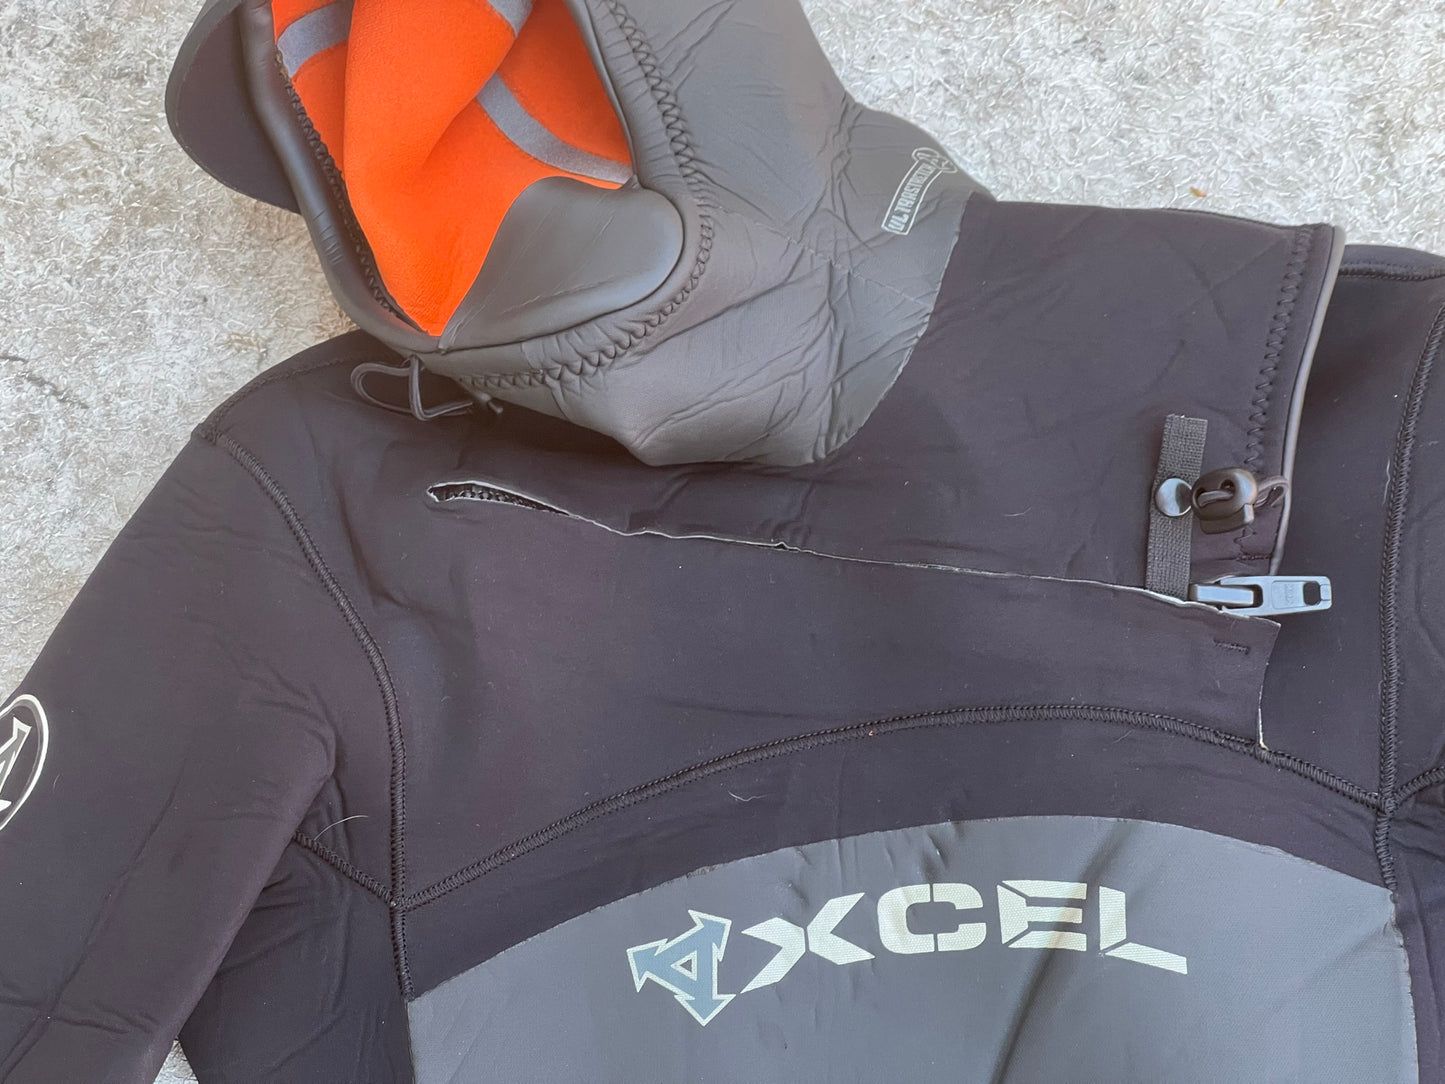 Wetsuit Men's Size Medium Xcel 5.4mm Hooded Full Wetsuit Jet Black